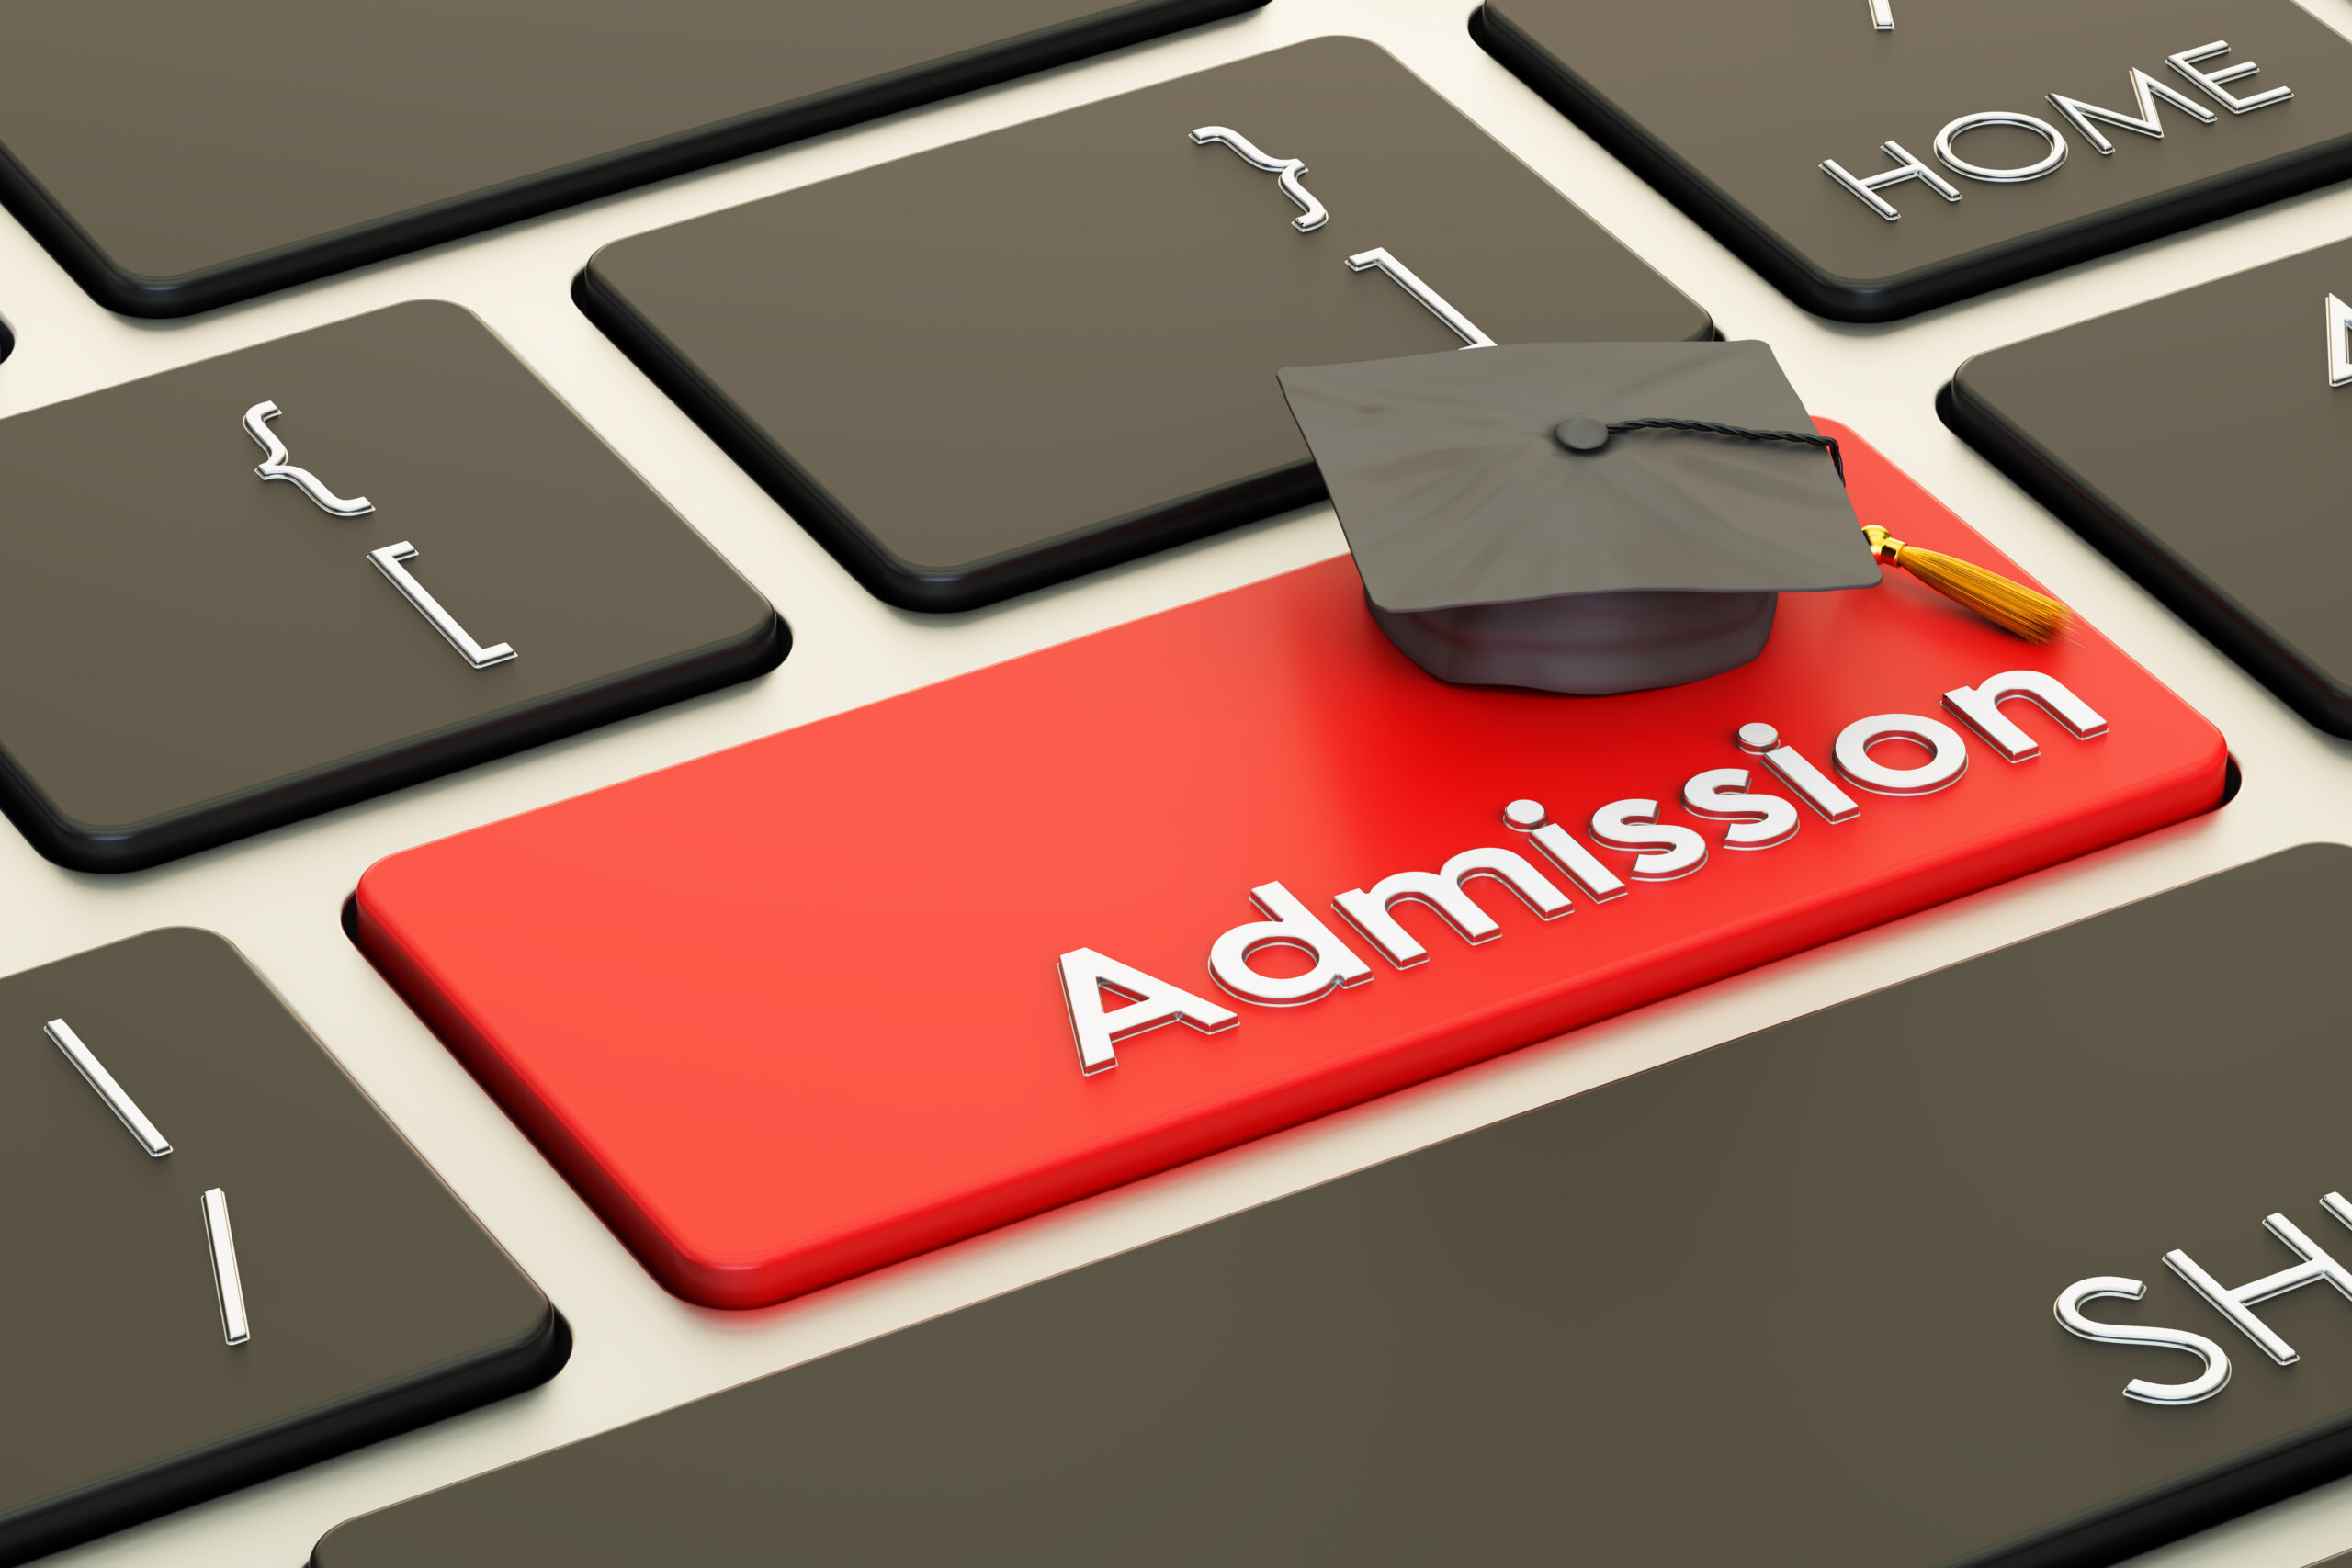 university admissions